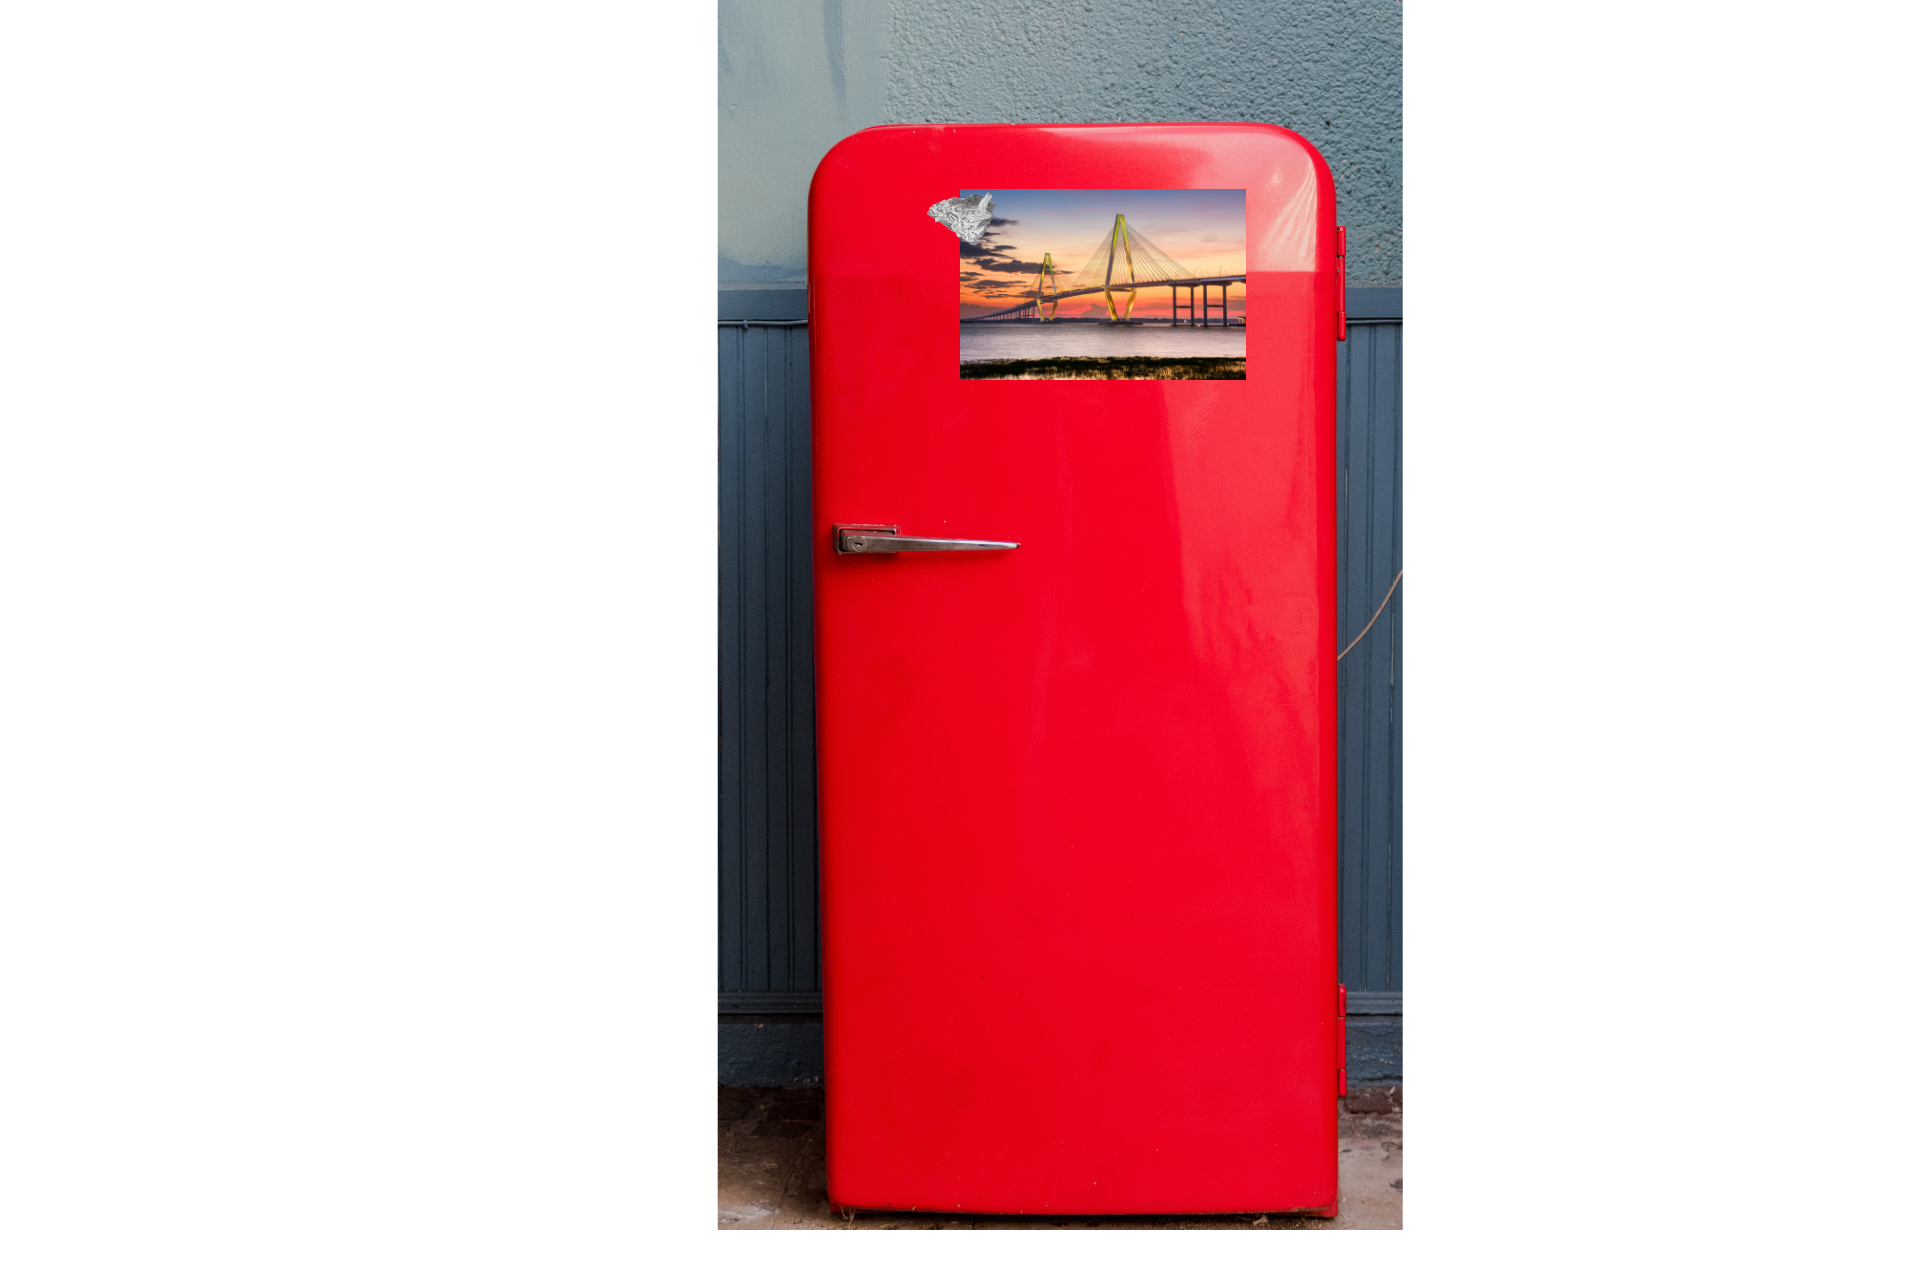 Handmade Pewter State Symbols Travel Refrigerator Magnet- South Carolina - House of Morgan Pewter